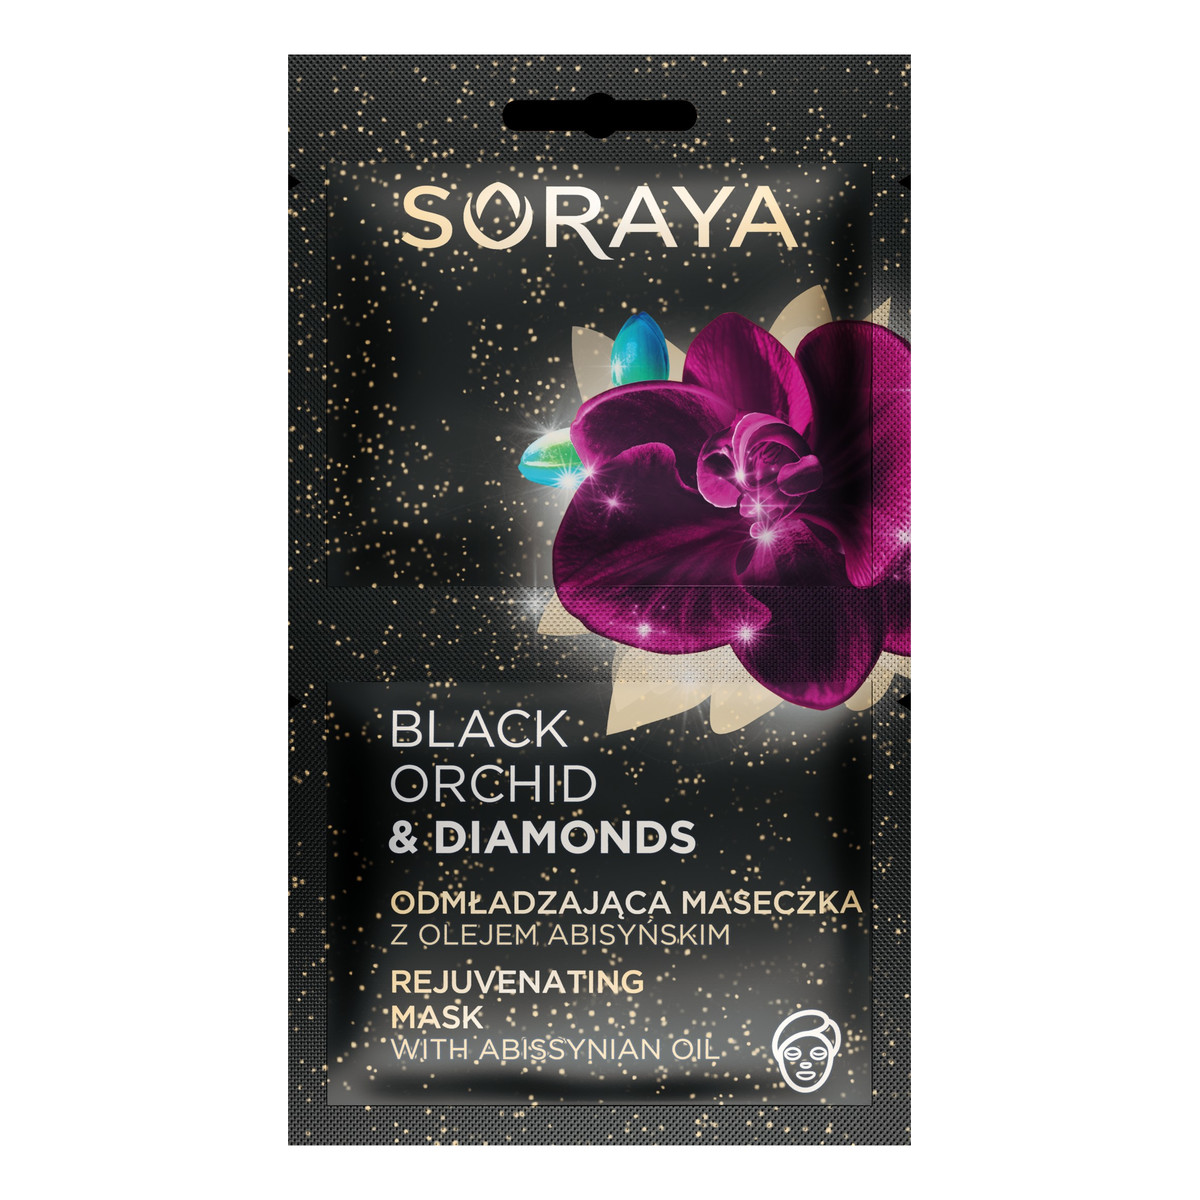 Soraya BLACK ORCHID & DIAM Maseczka saszetka